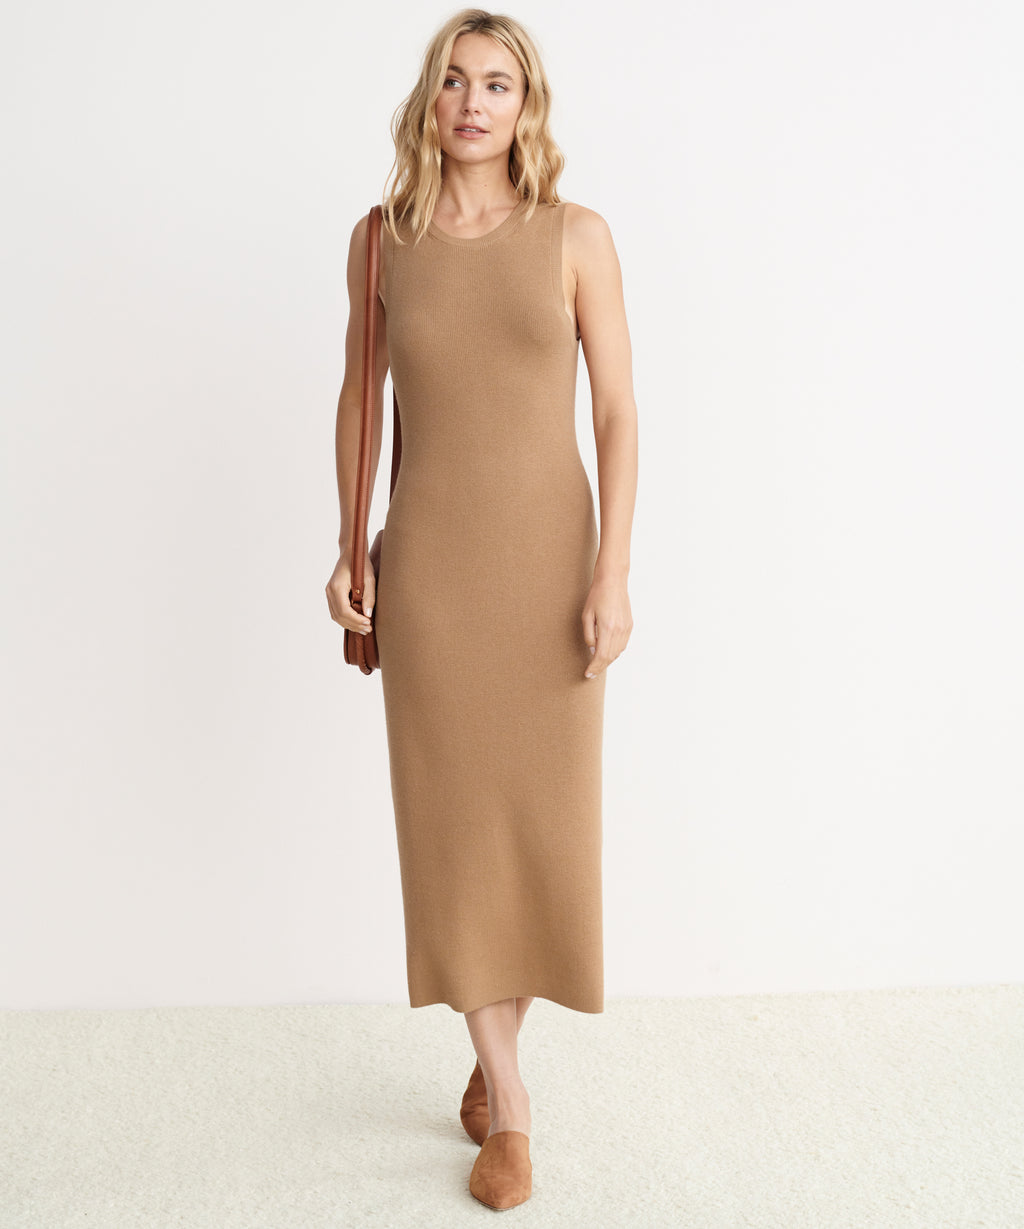 Leather Accent Denim Mini Dress - Women - Ready-to-Wear